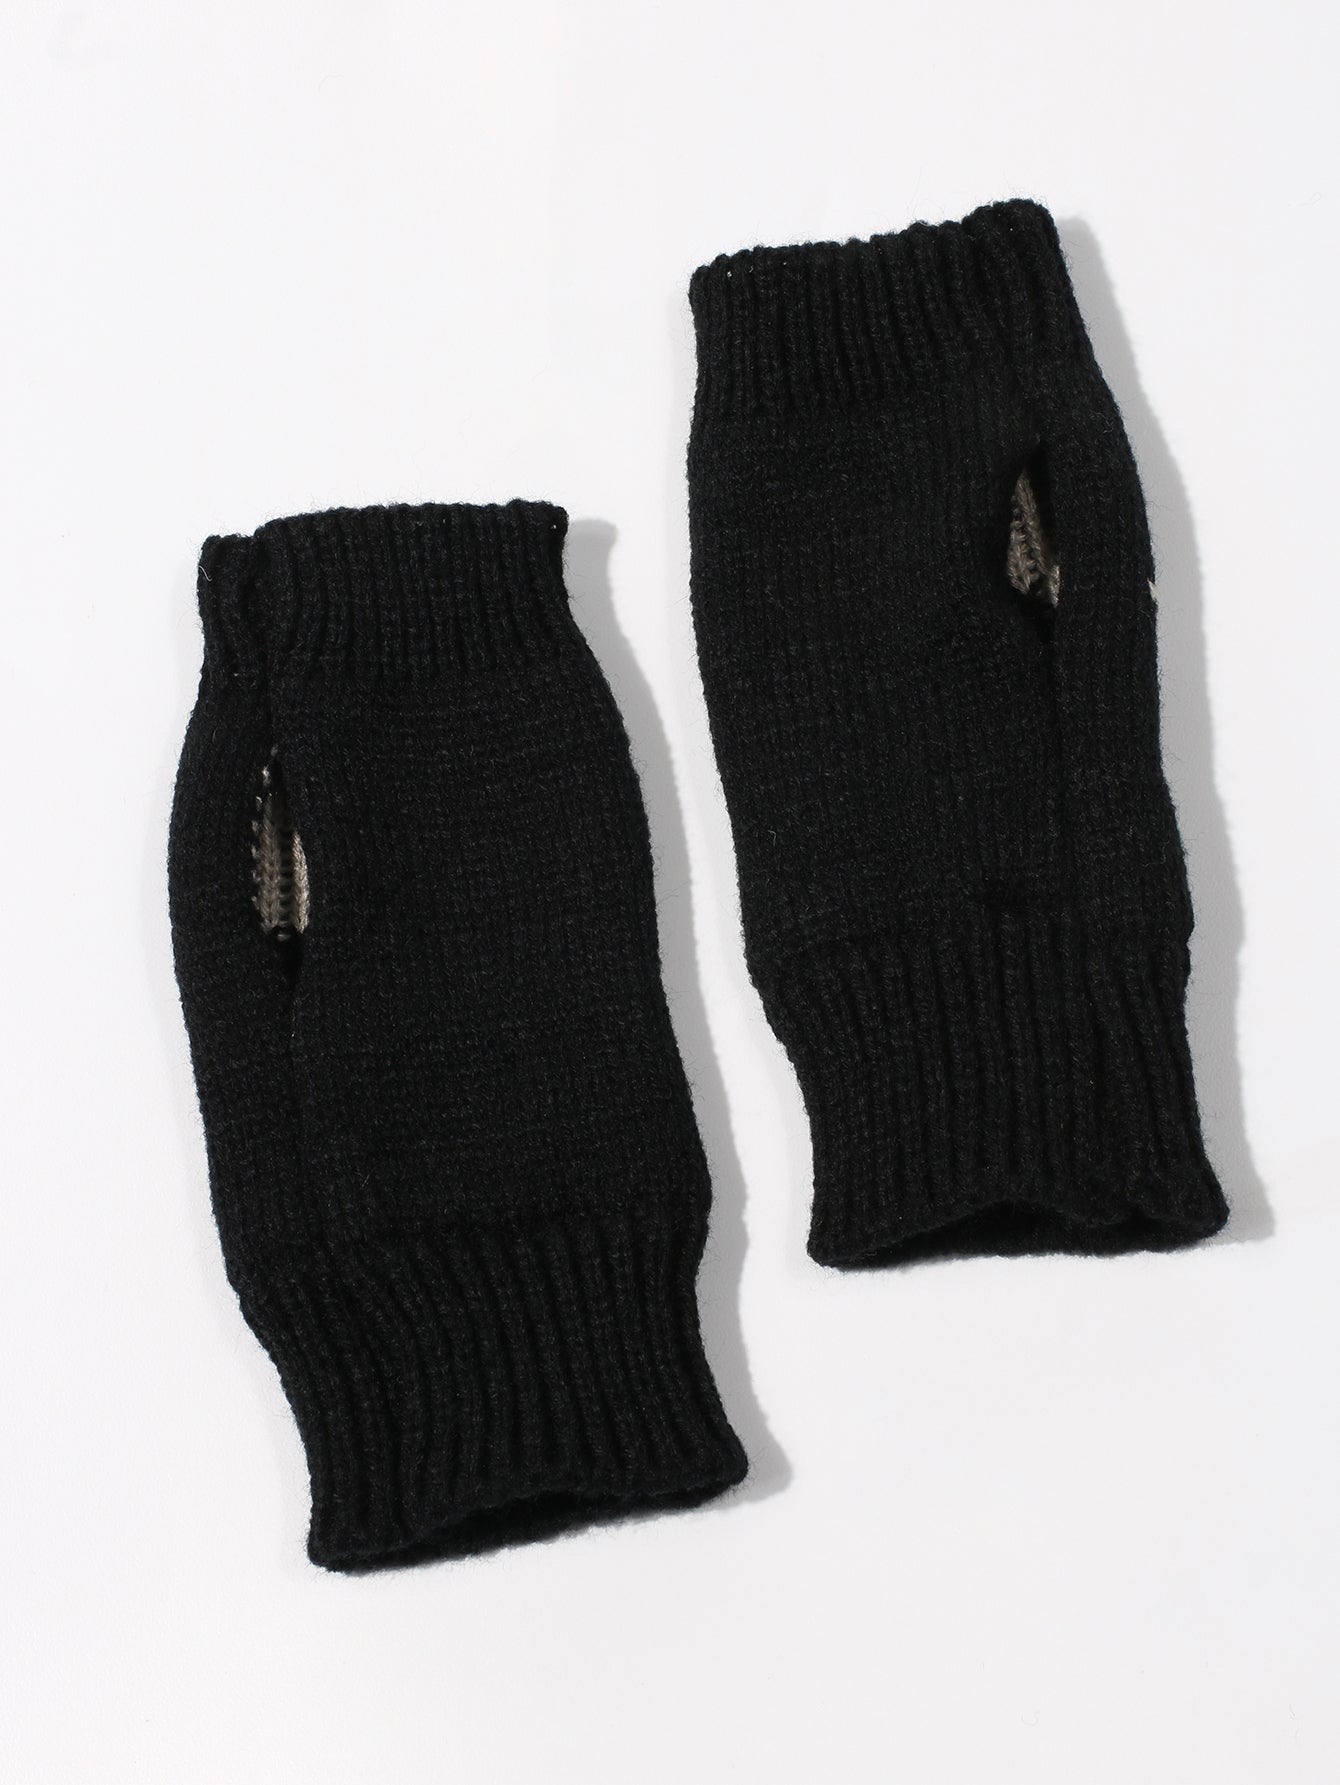 ARTILDAY black gloves knitted gloves